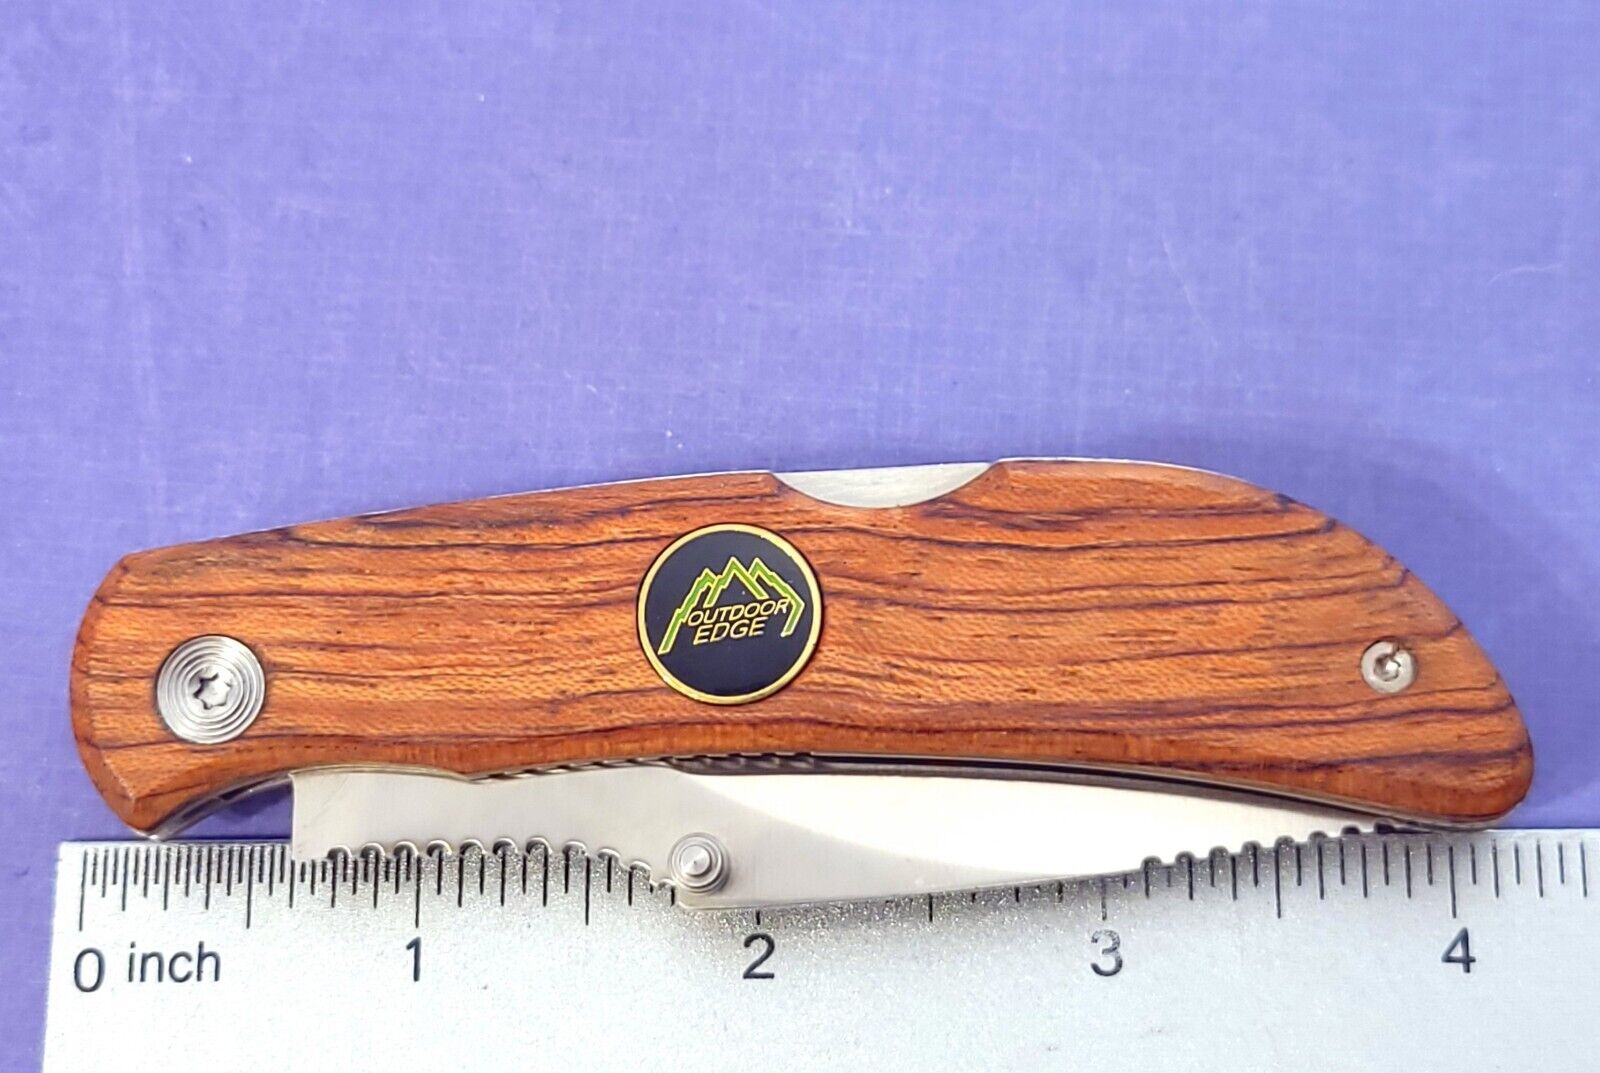 Outdoor Edge Knife Caper Lite Lockback Wood Handles AUS-8 Steel Blade